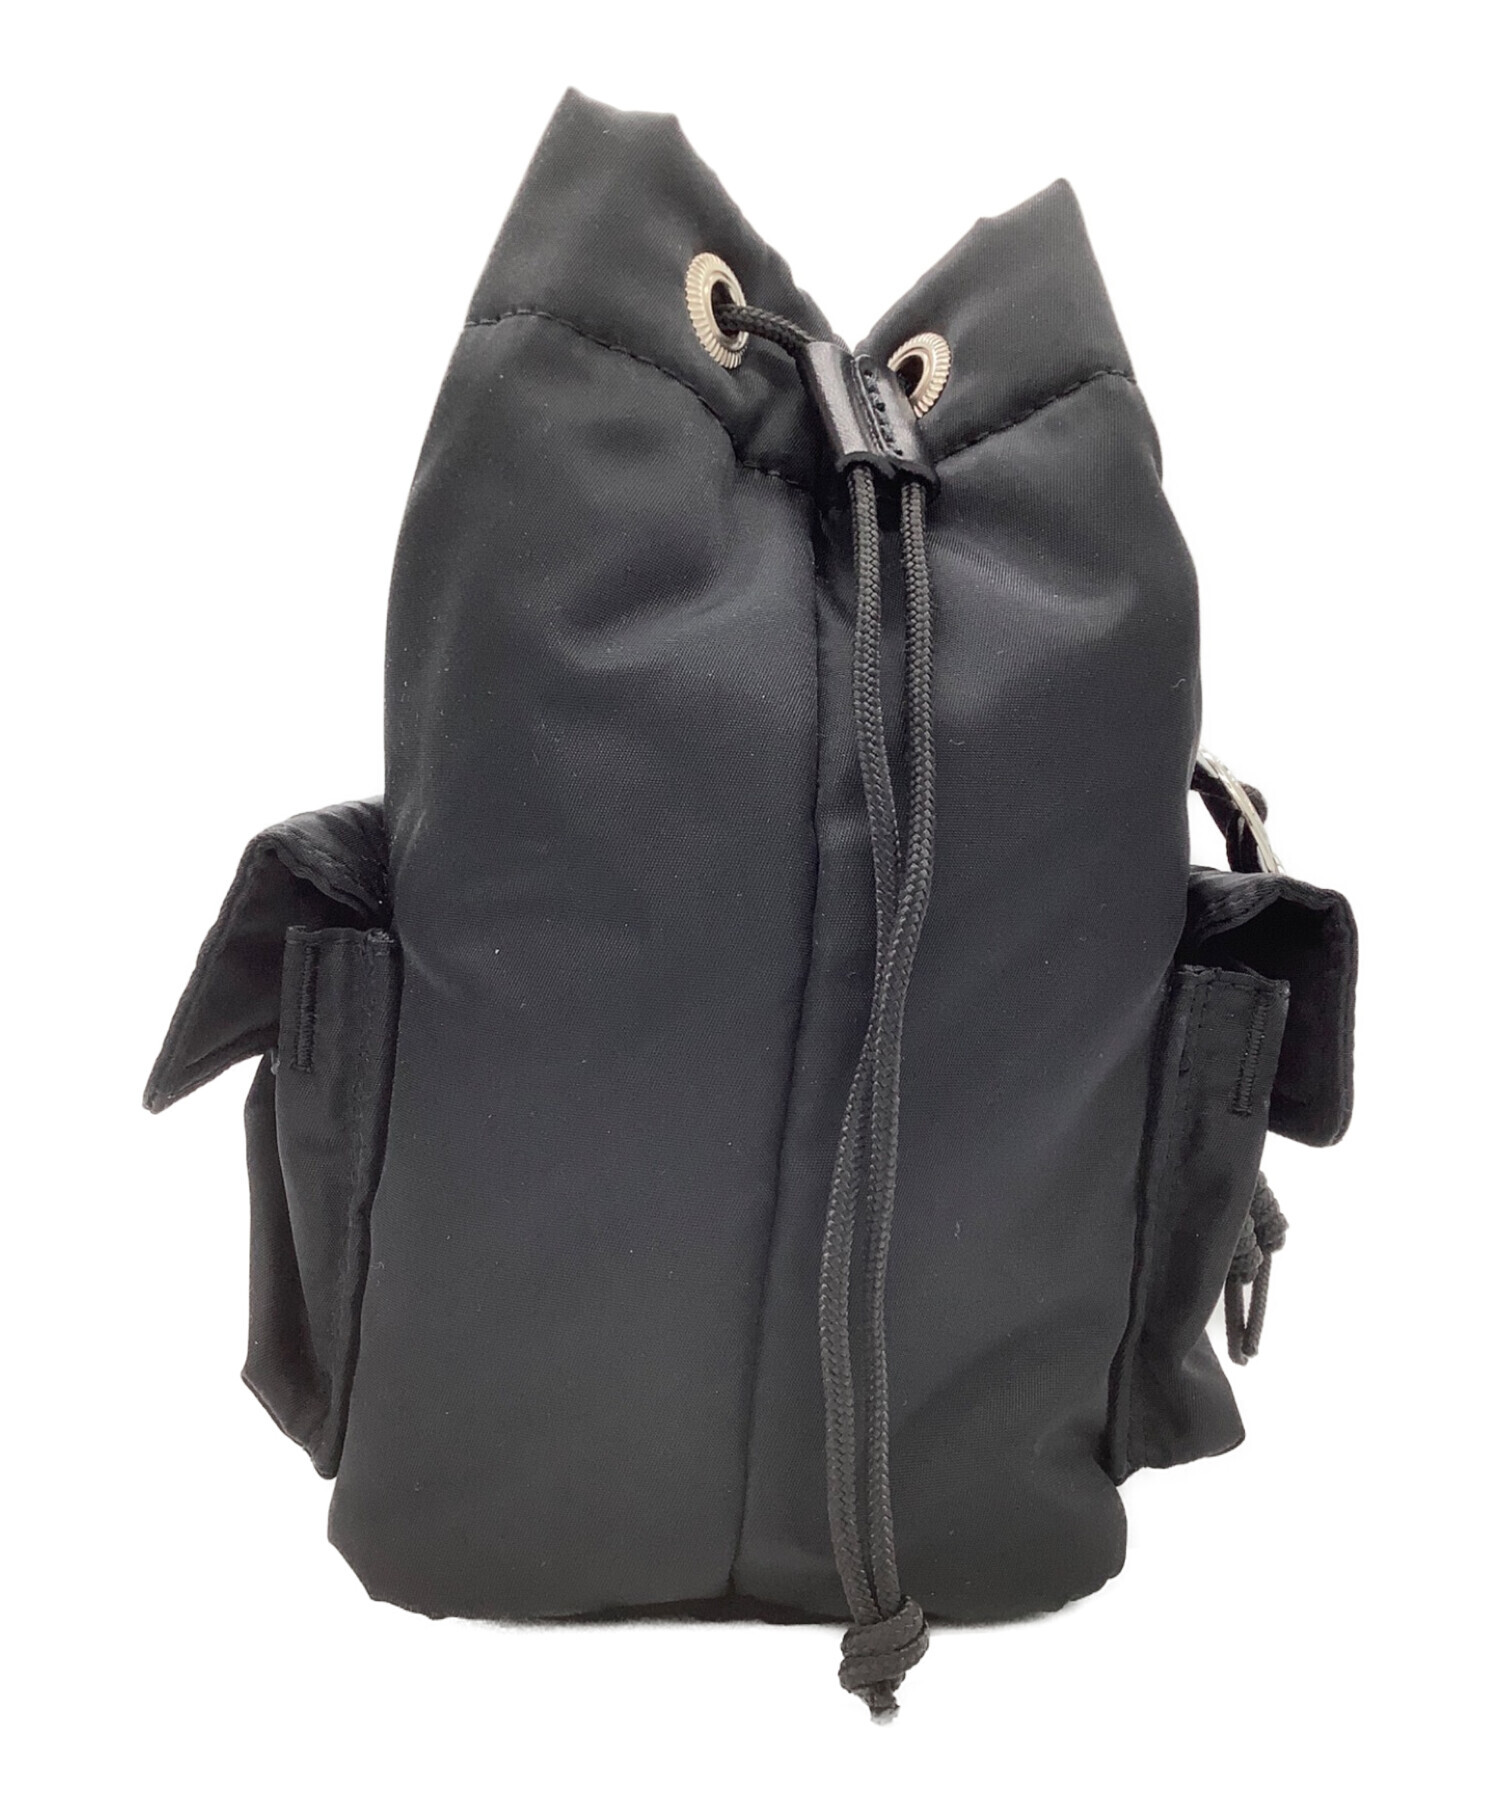 PORTER (ポーター) TOGA ARCHIVES (トーガアーカイブス) String bag TOGA × PORTER ストリングバッグ  ブラック サイズ:ONE